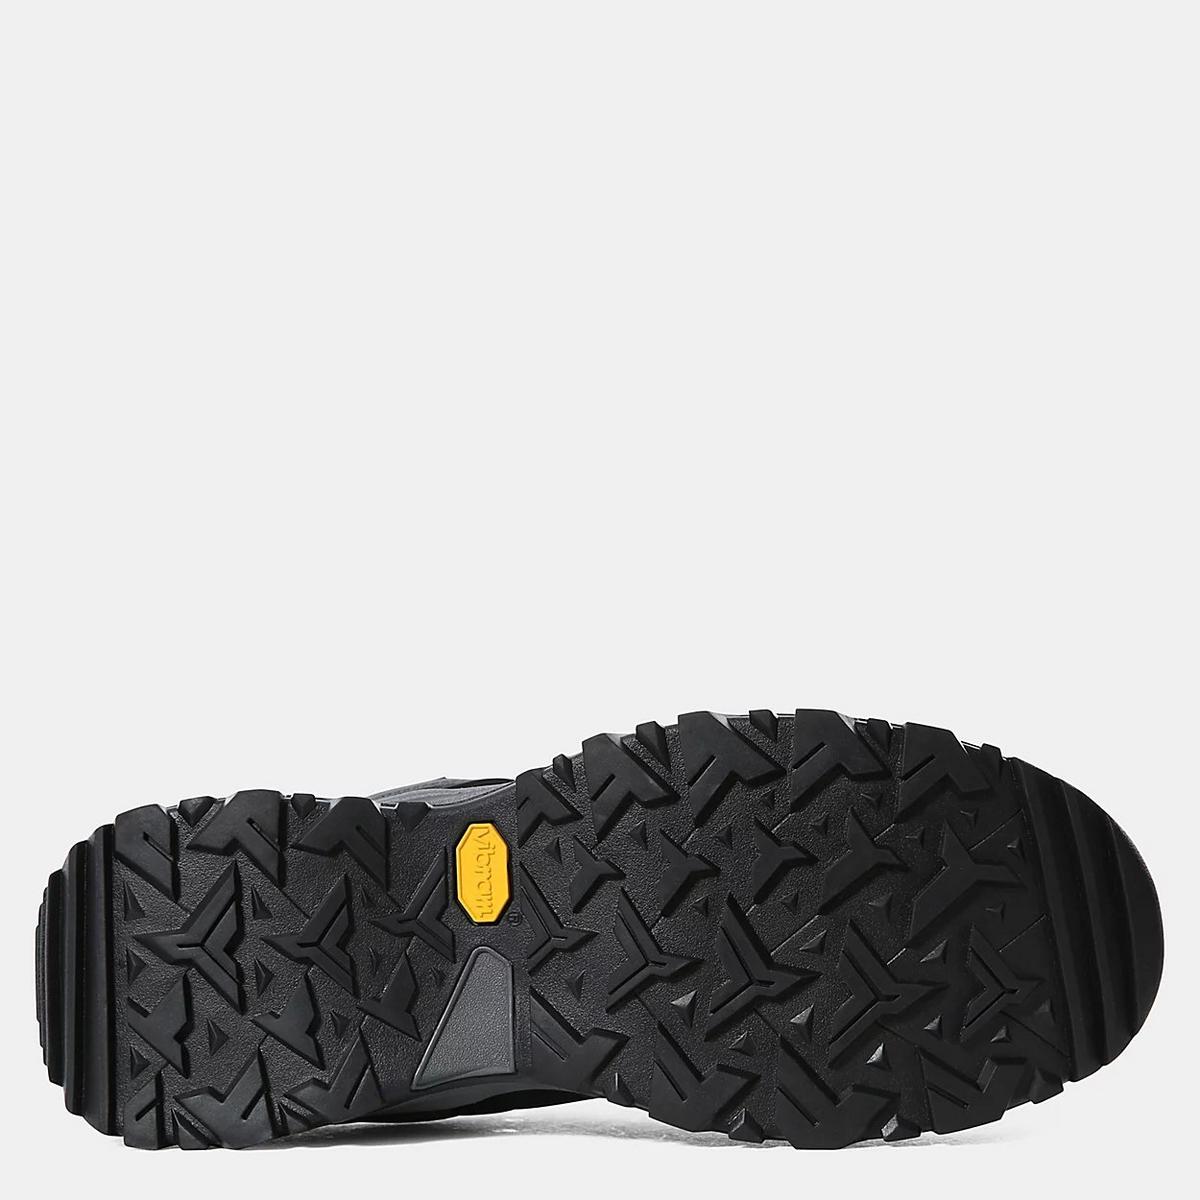 The North Face Men's Hedgehog Futurelight Shoes - Black